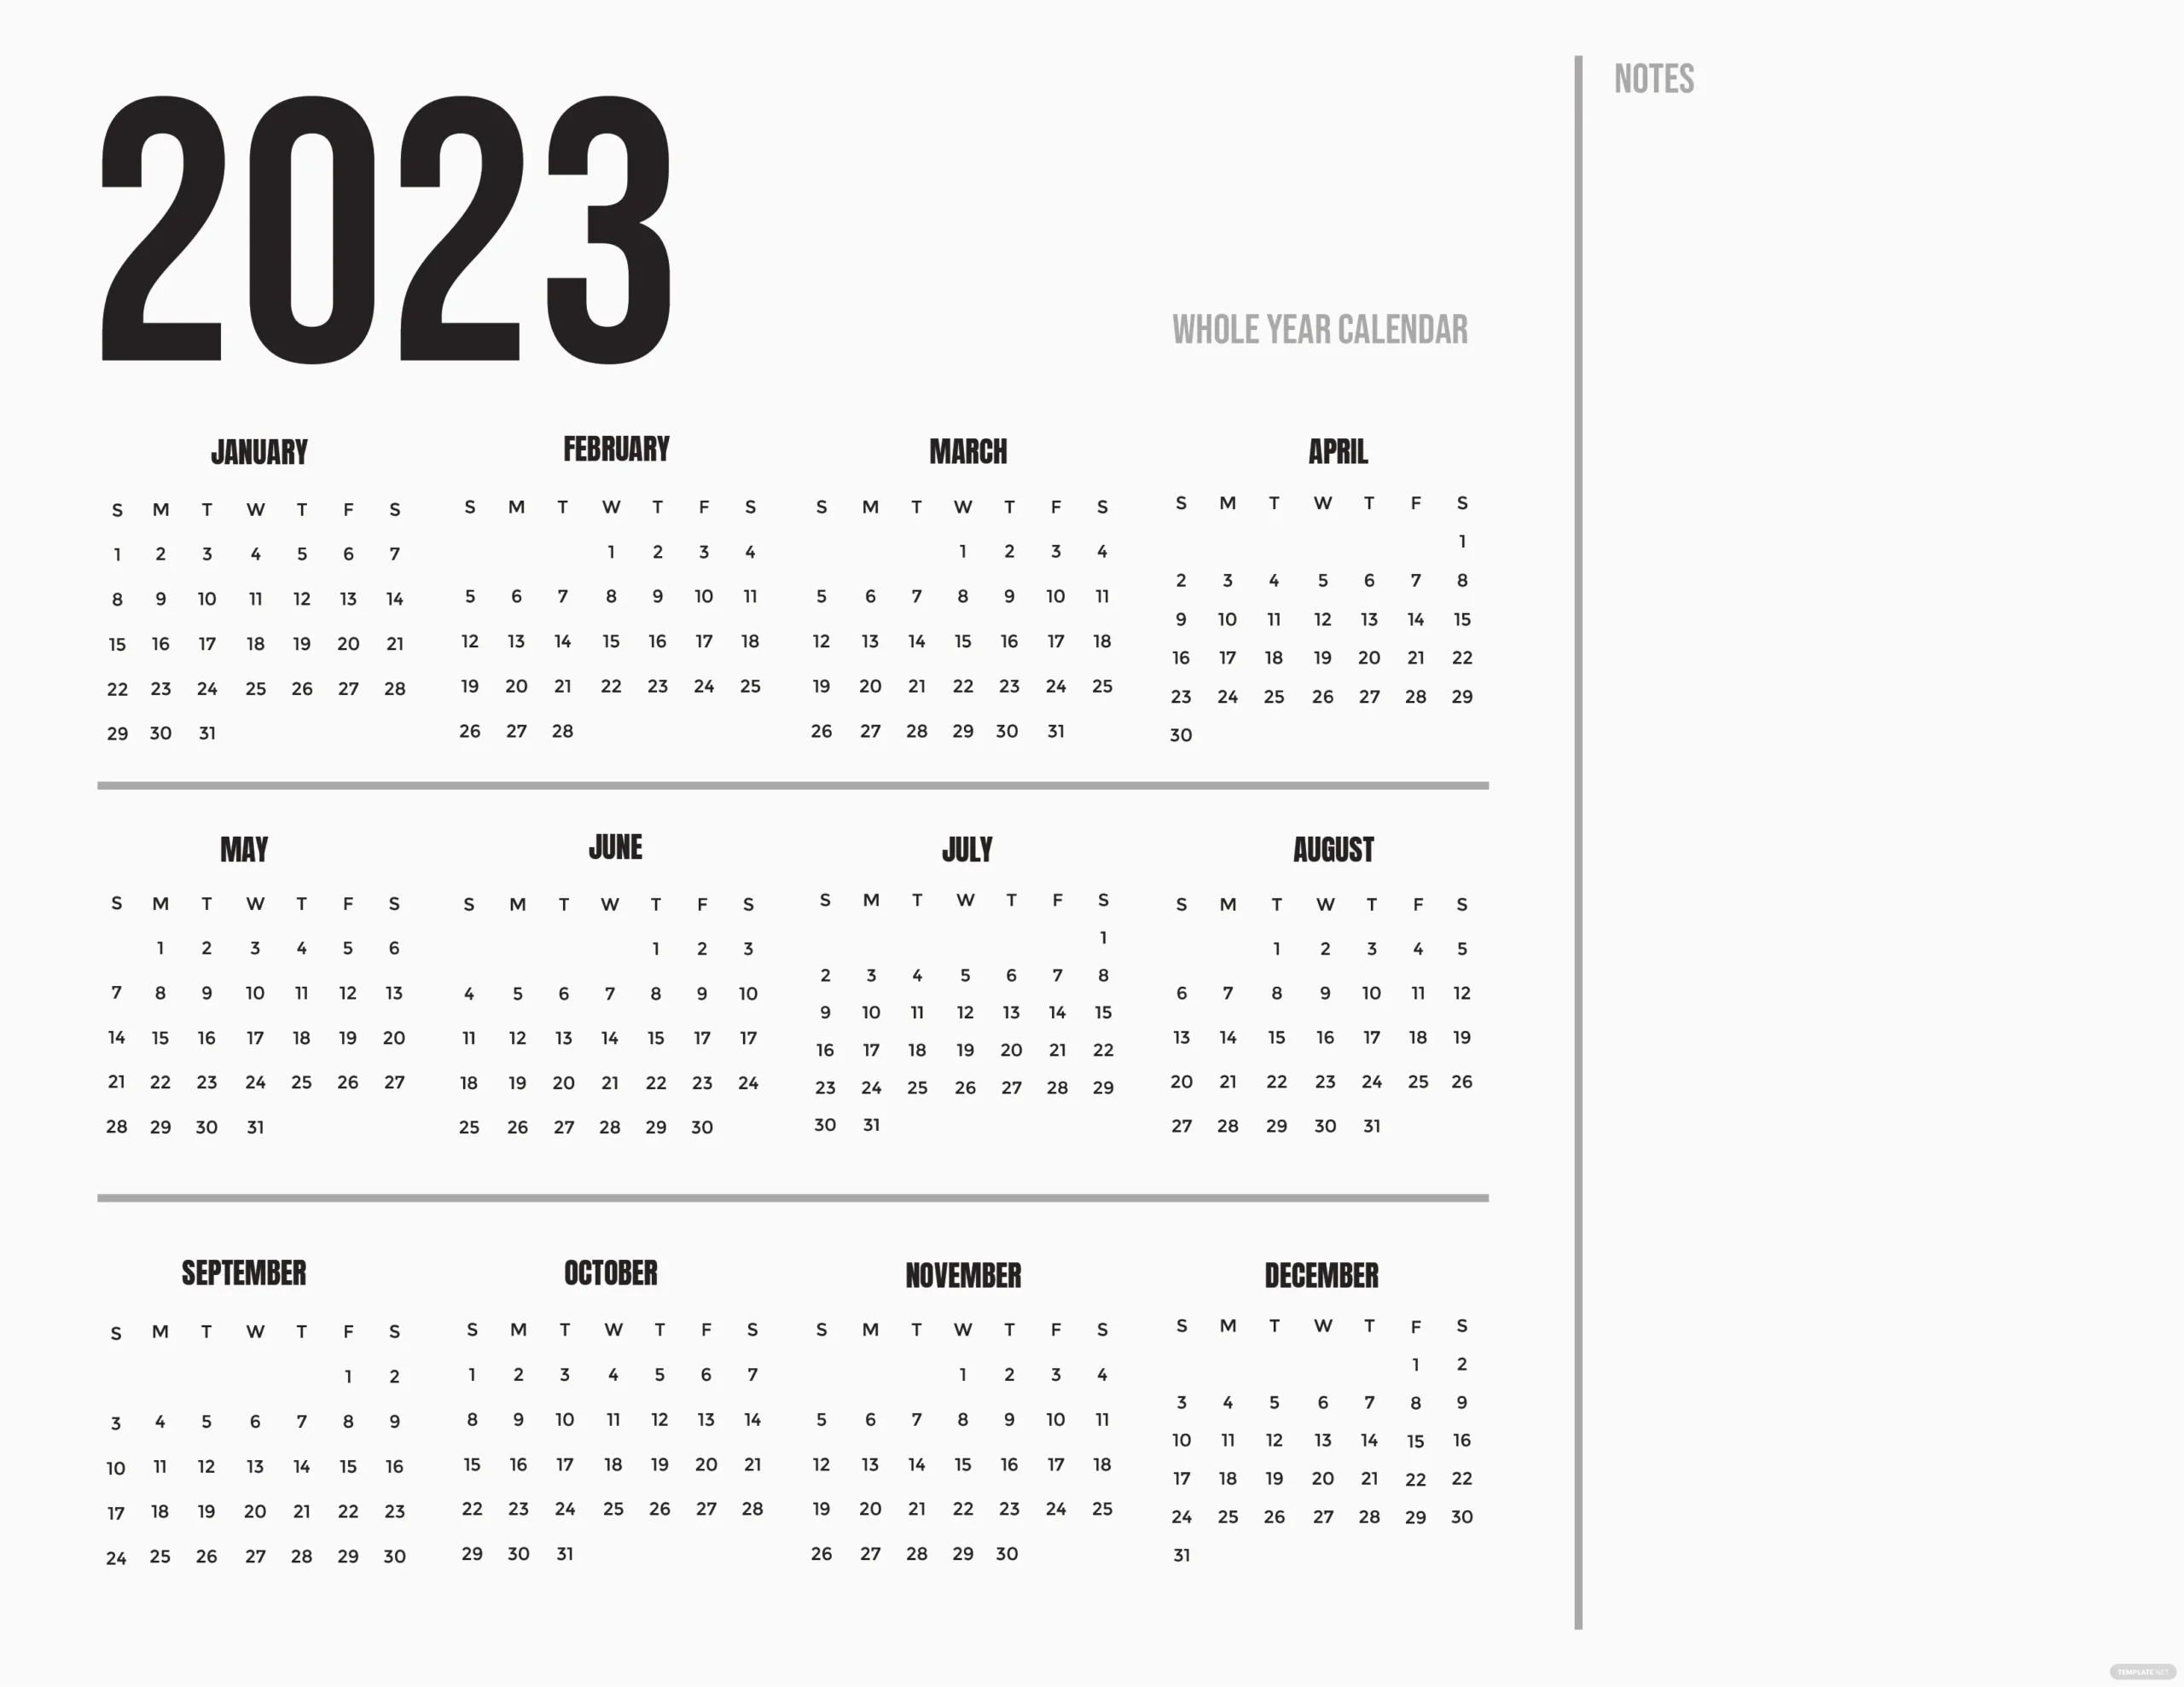 2023 Calendar Templates: Making Planning Easier